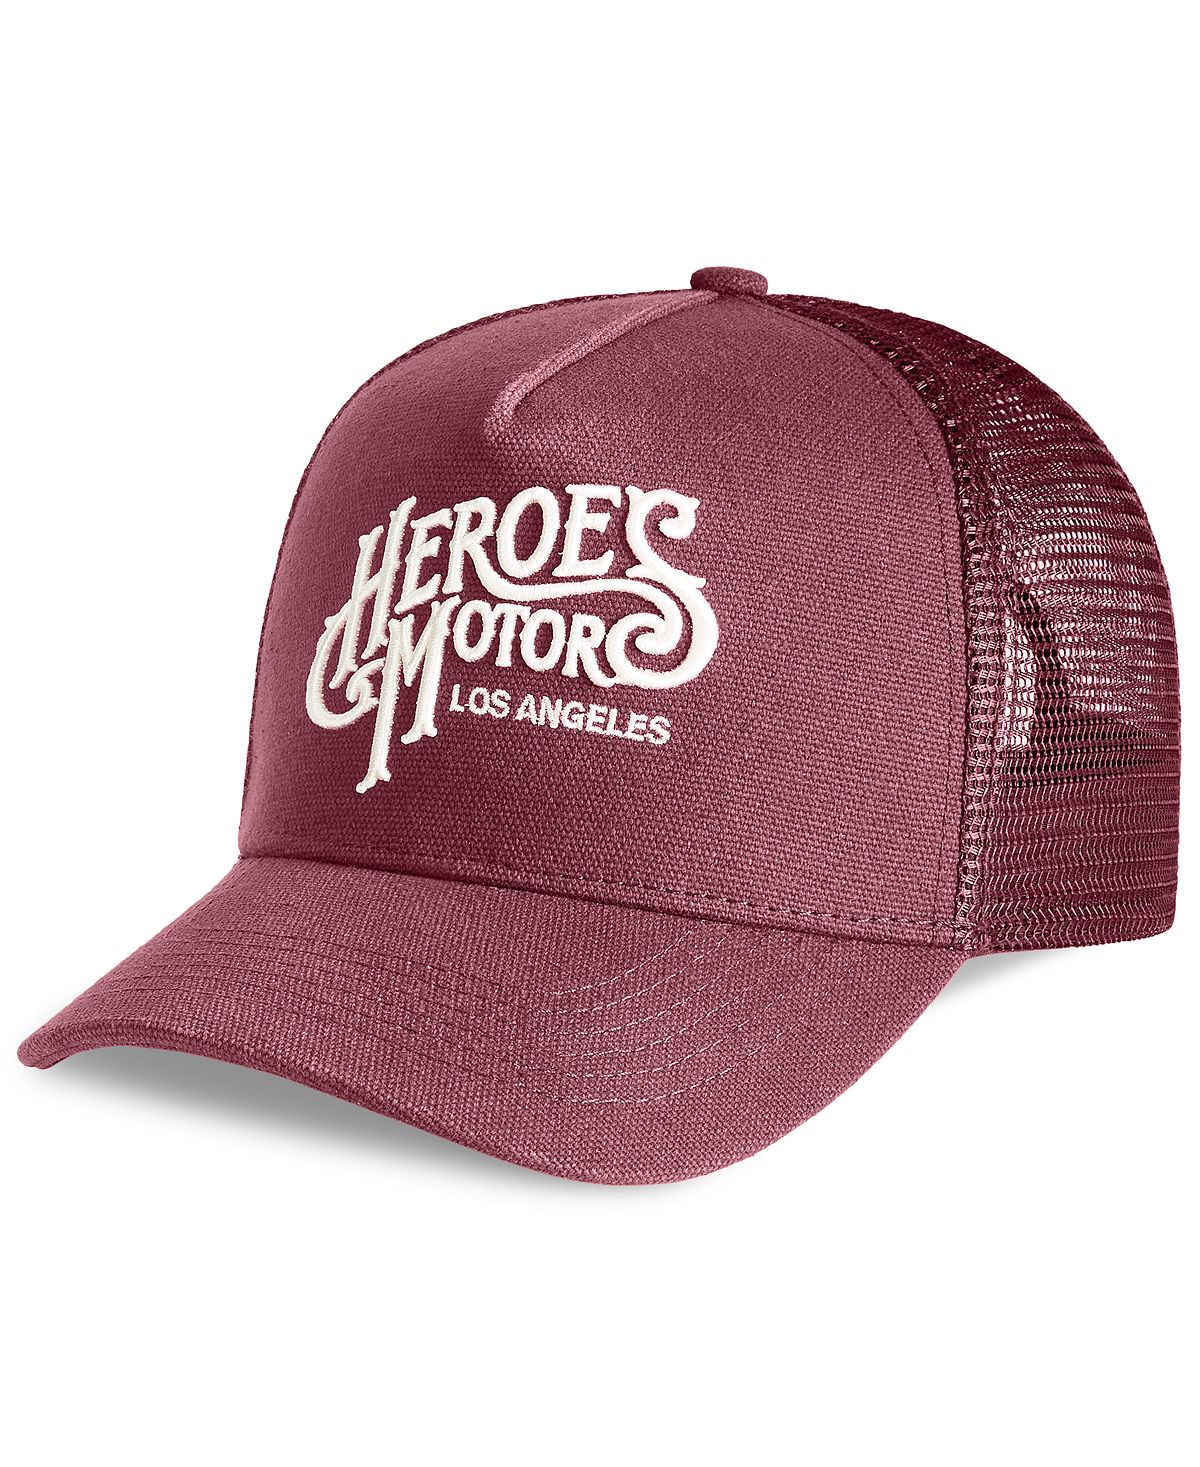 Heroes Motors 3d Embroidered Trucker Cap Red